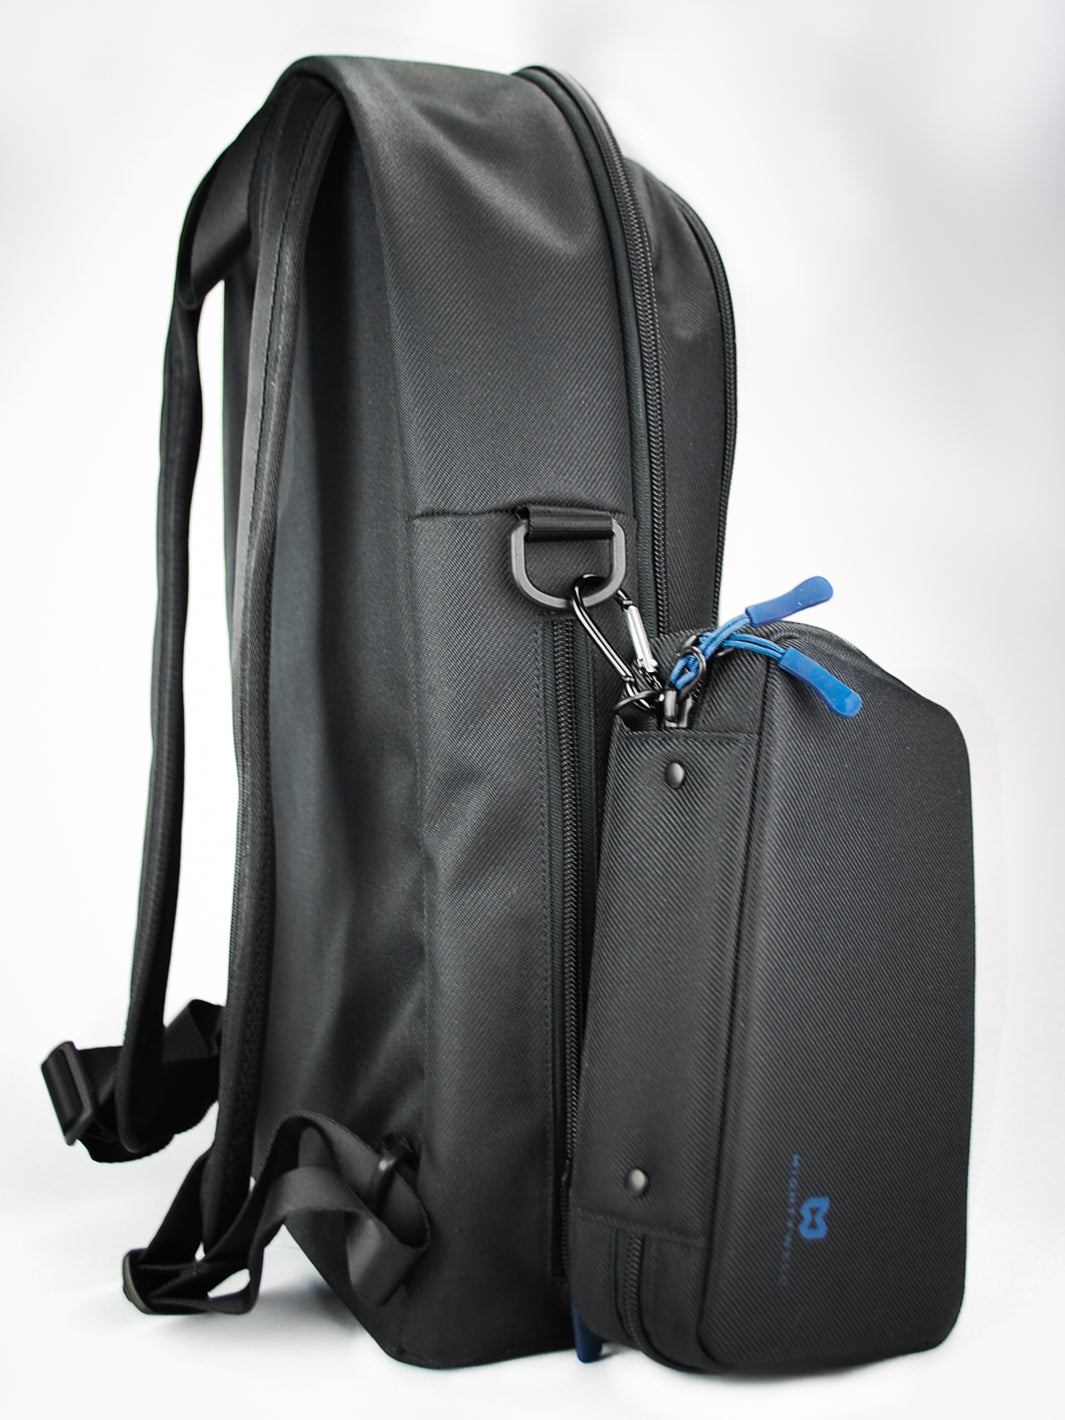 Fluid Motion Backpack: Best Feeding Tube and TPN Backpack Black